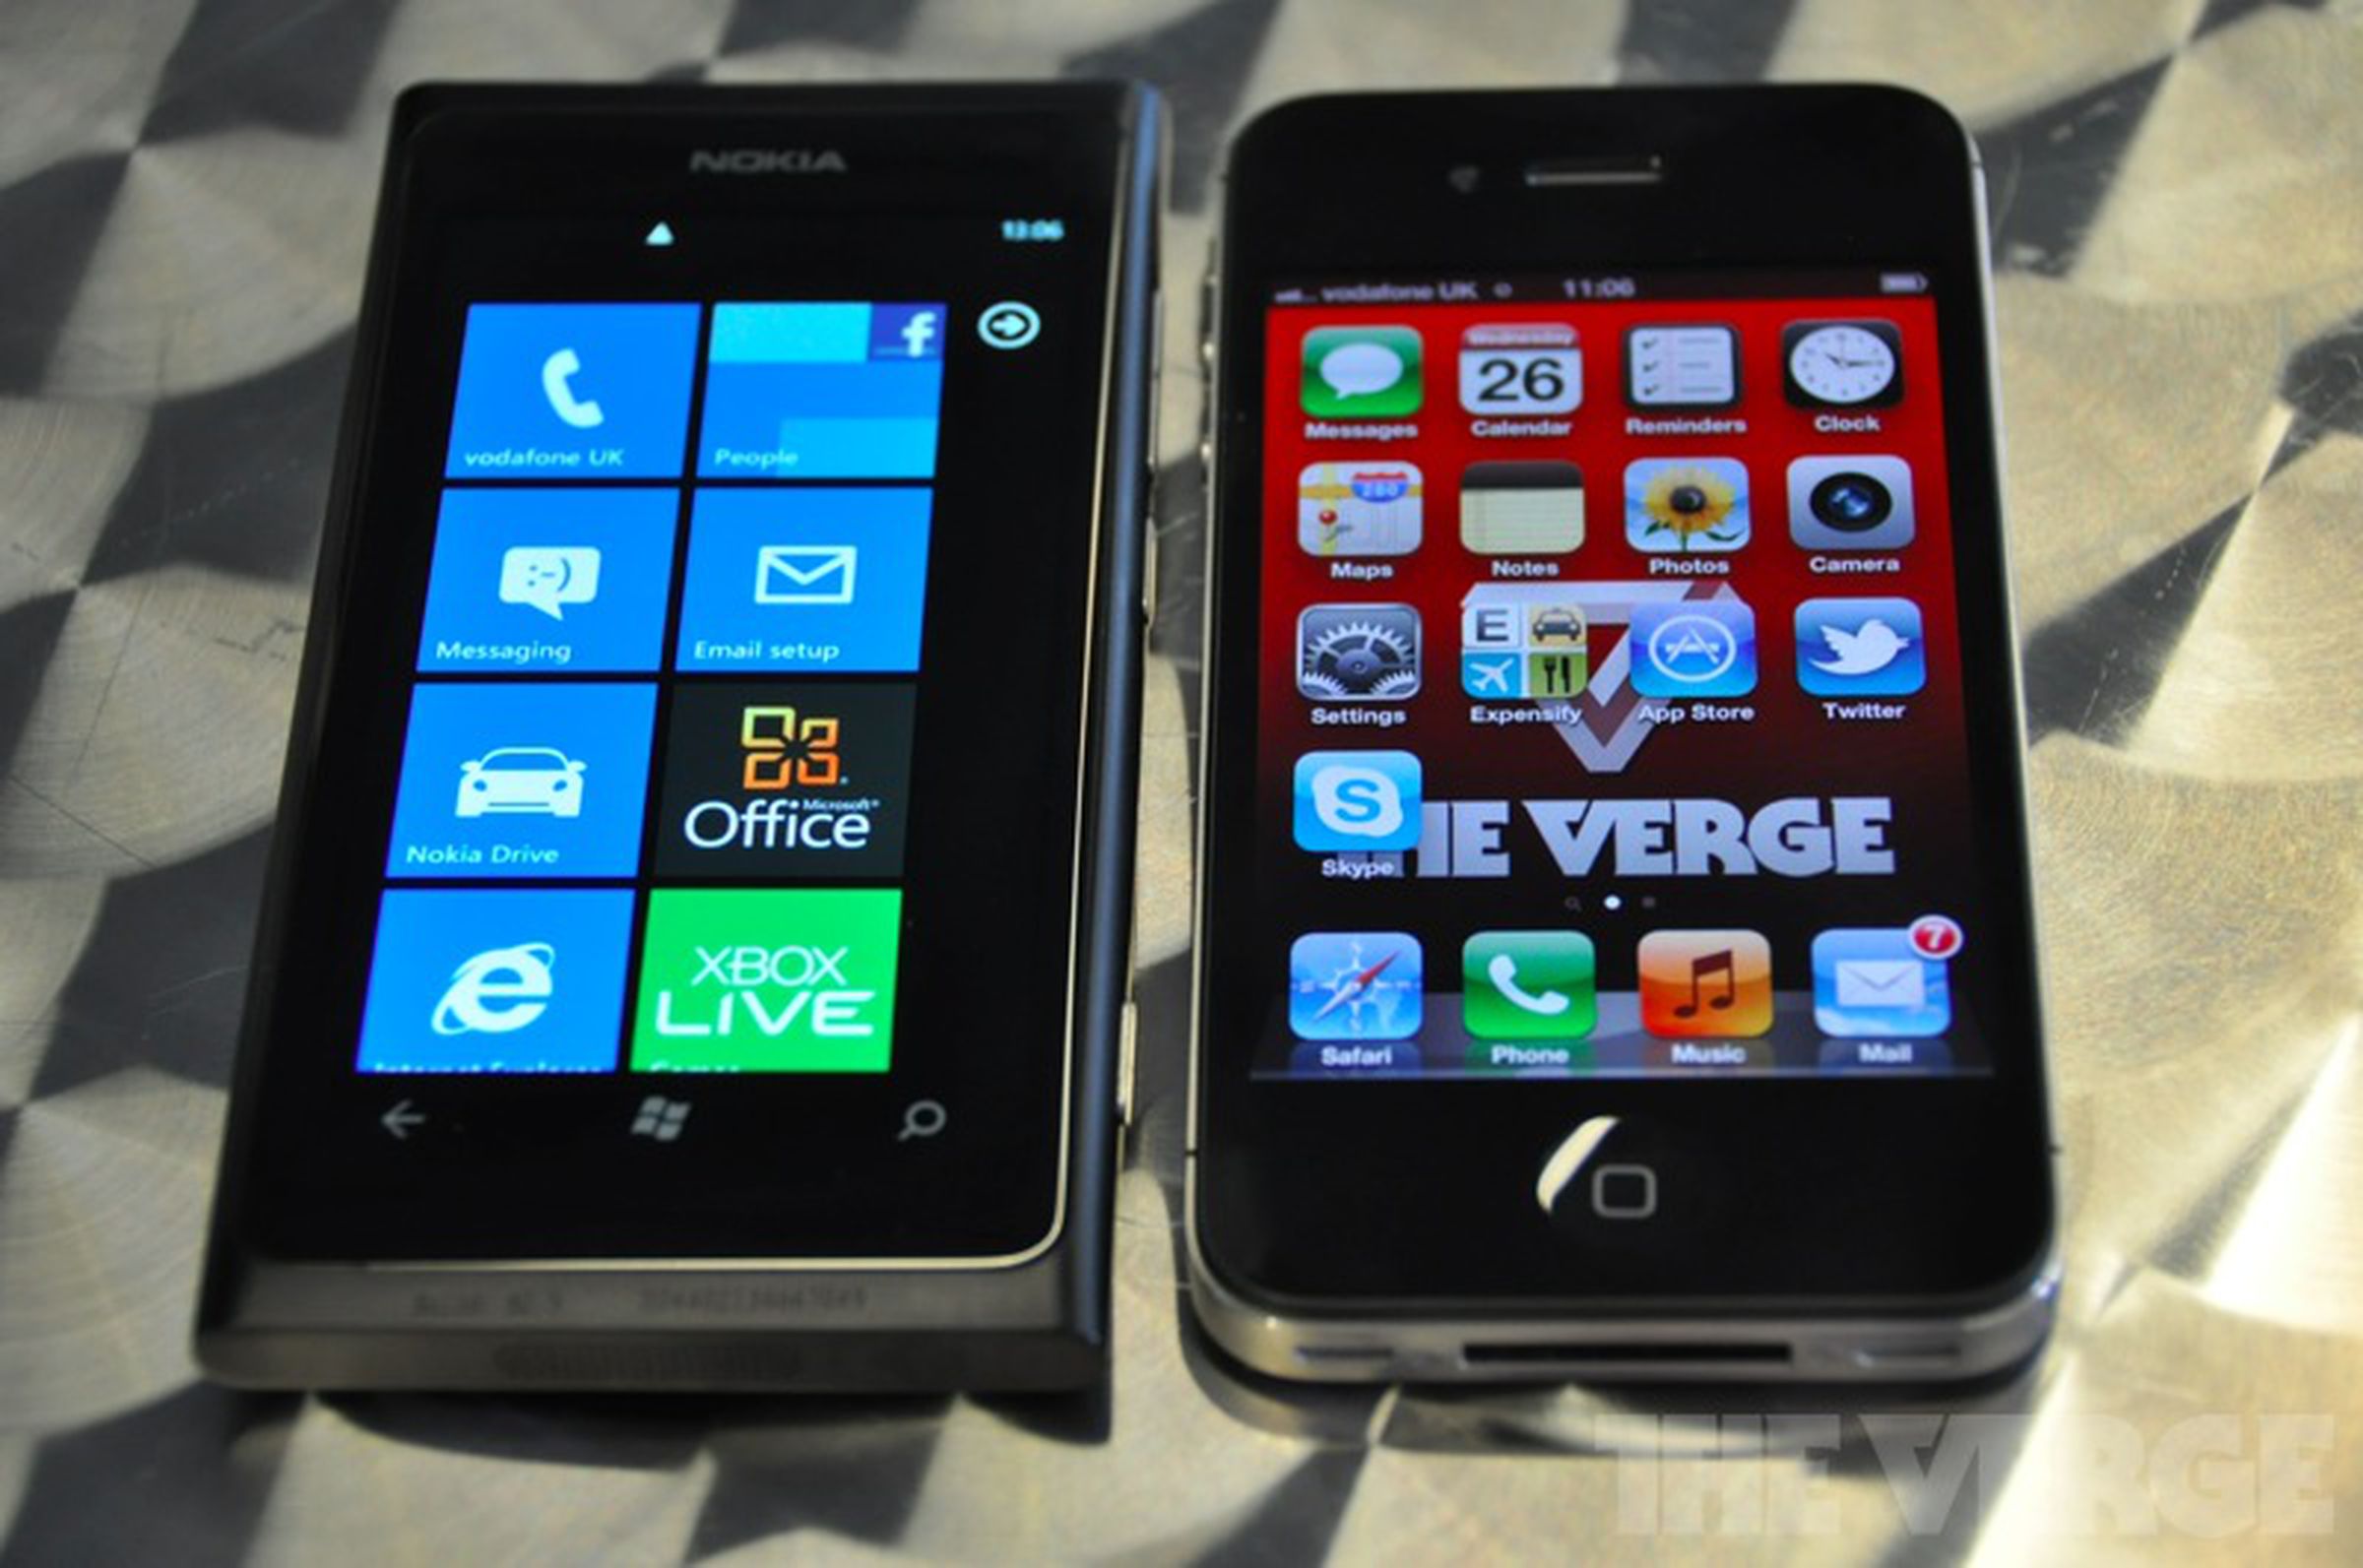 Nokia Lumia 800 vs iPhone 4S and HTC Titan photo gallery